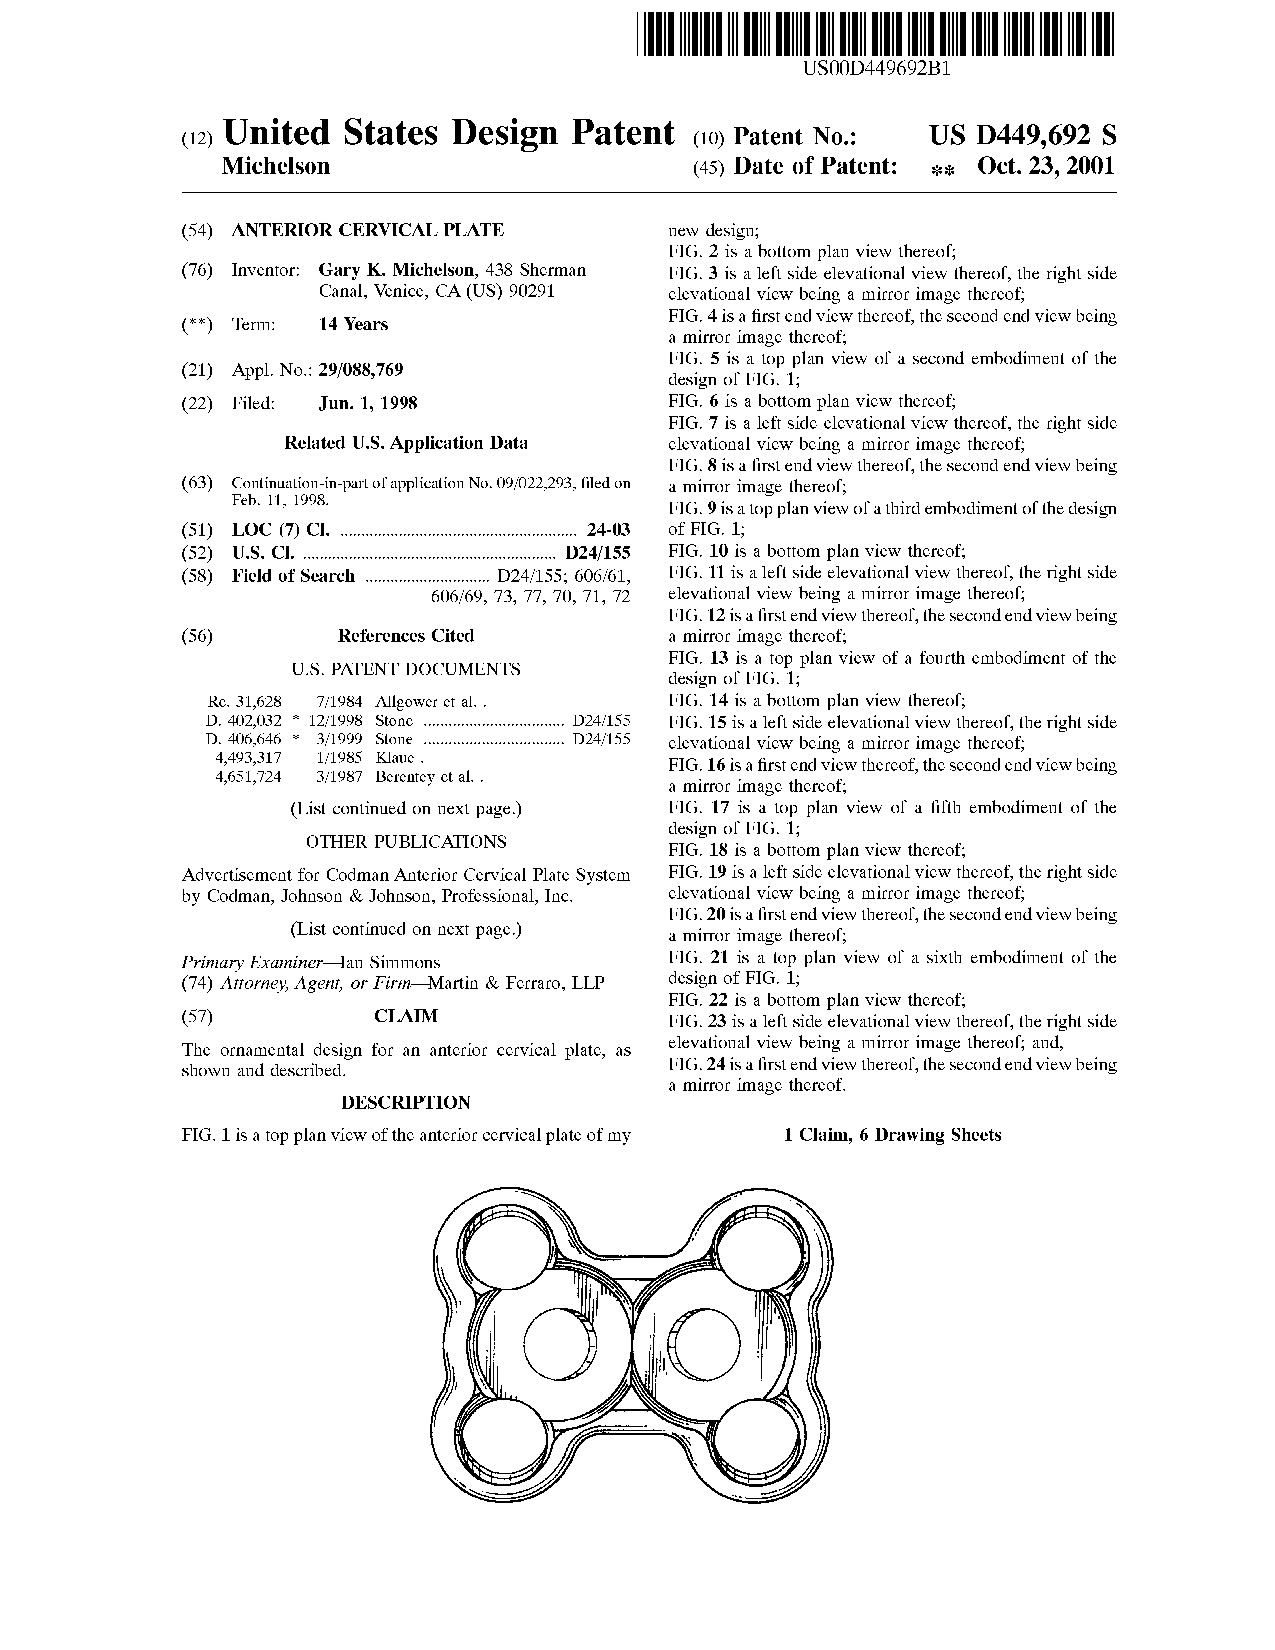 Anterior cervical plate - Patent D449,692